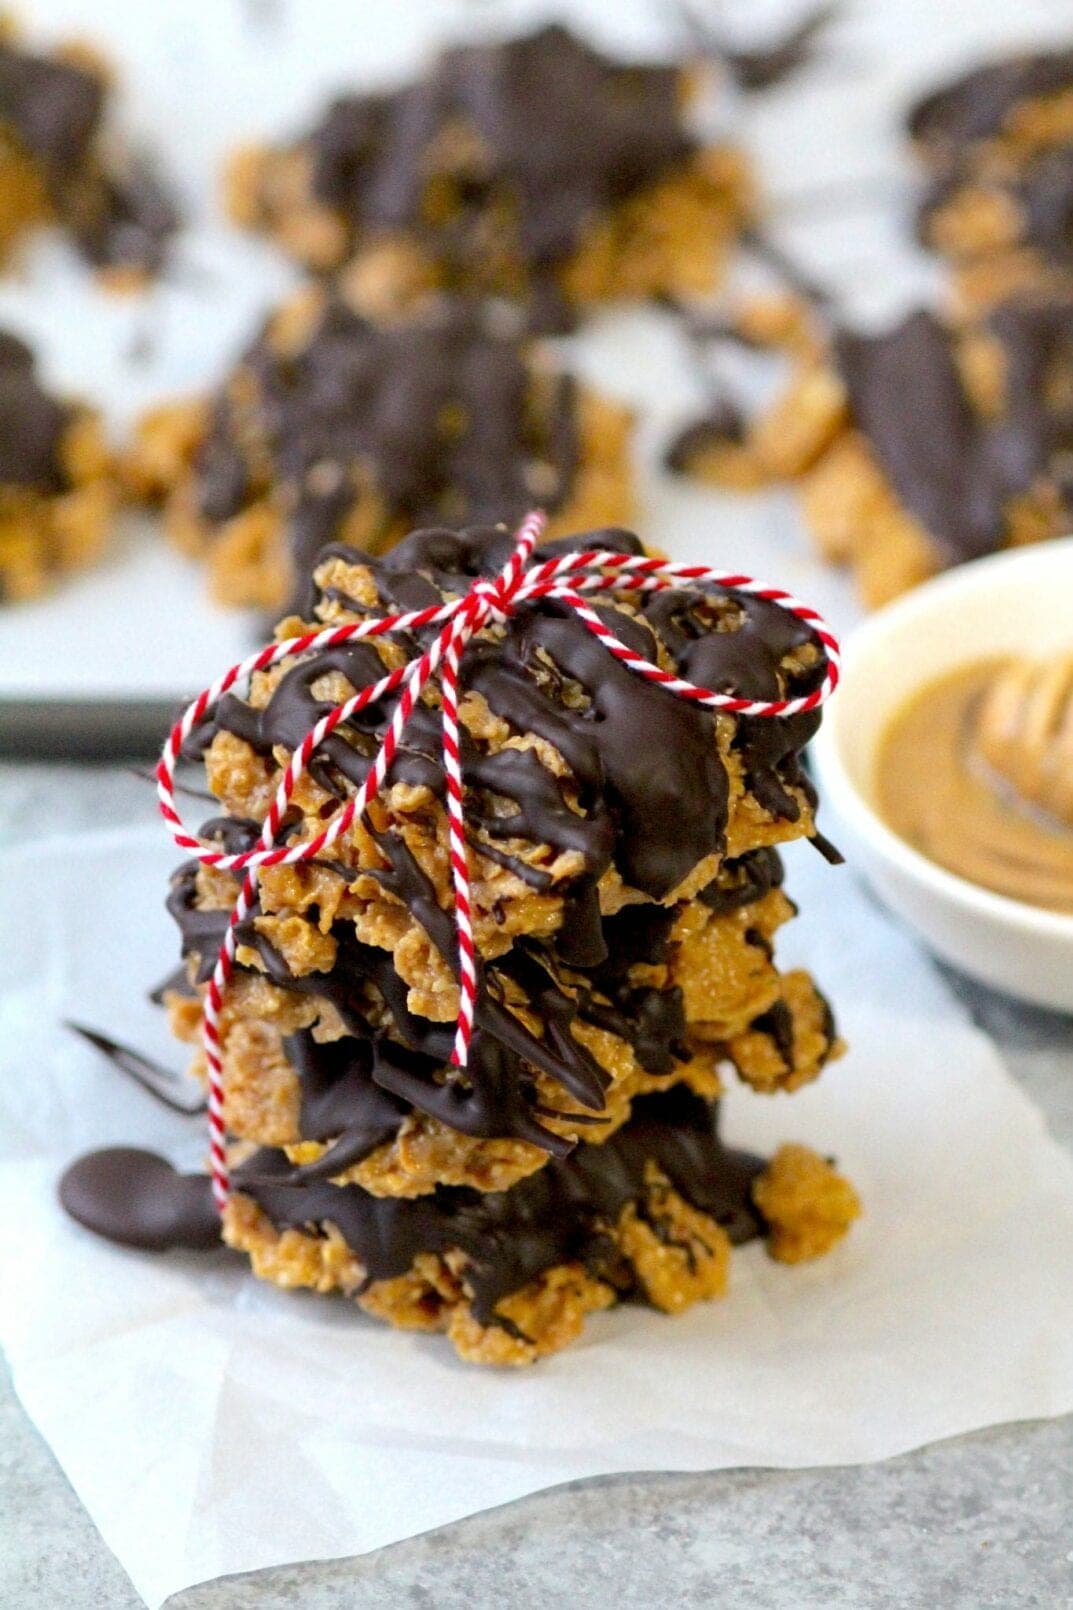 5-ingredient peanut butter + chocolate crunch cookies | www.nourishmovelove.com